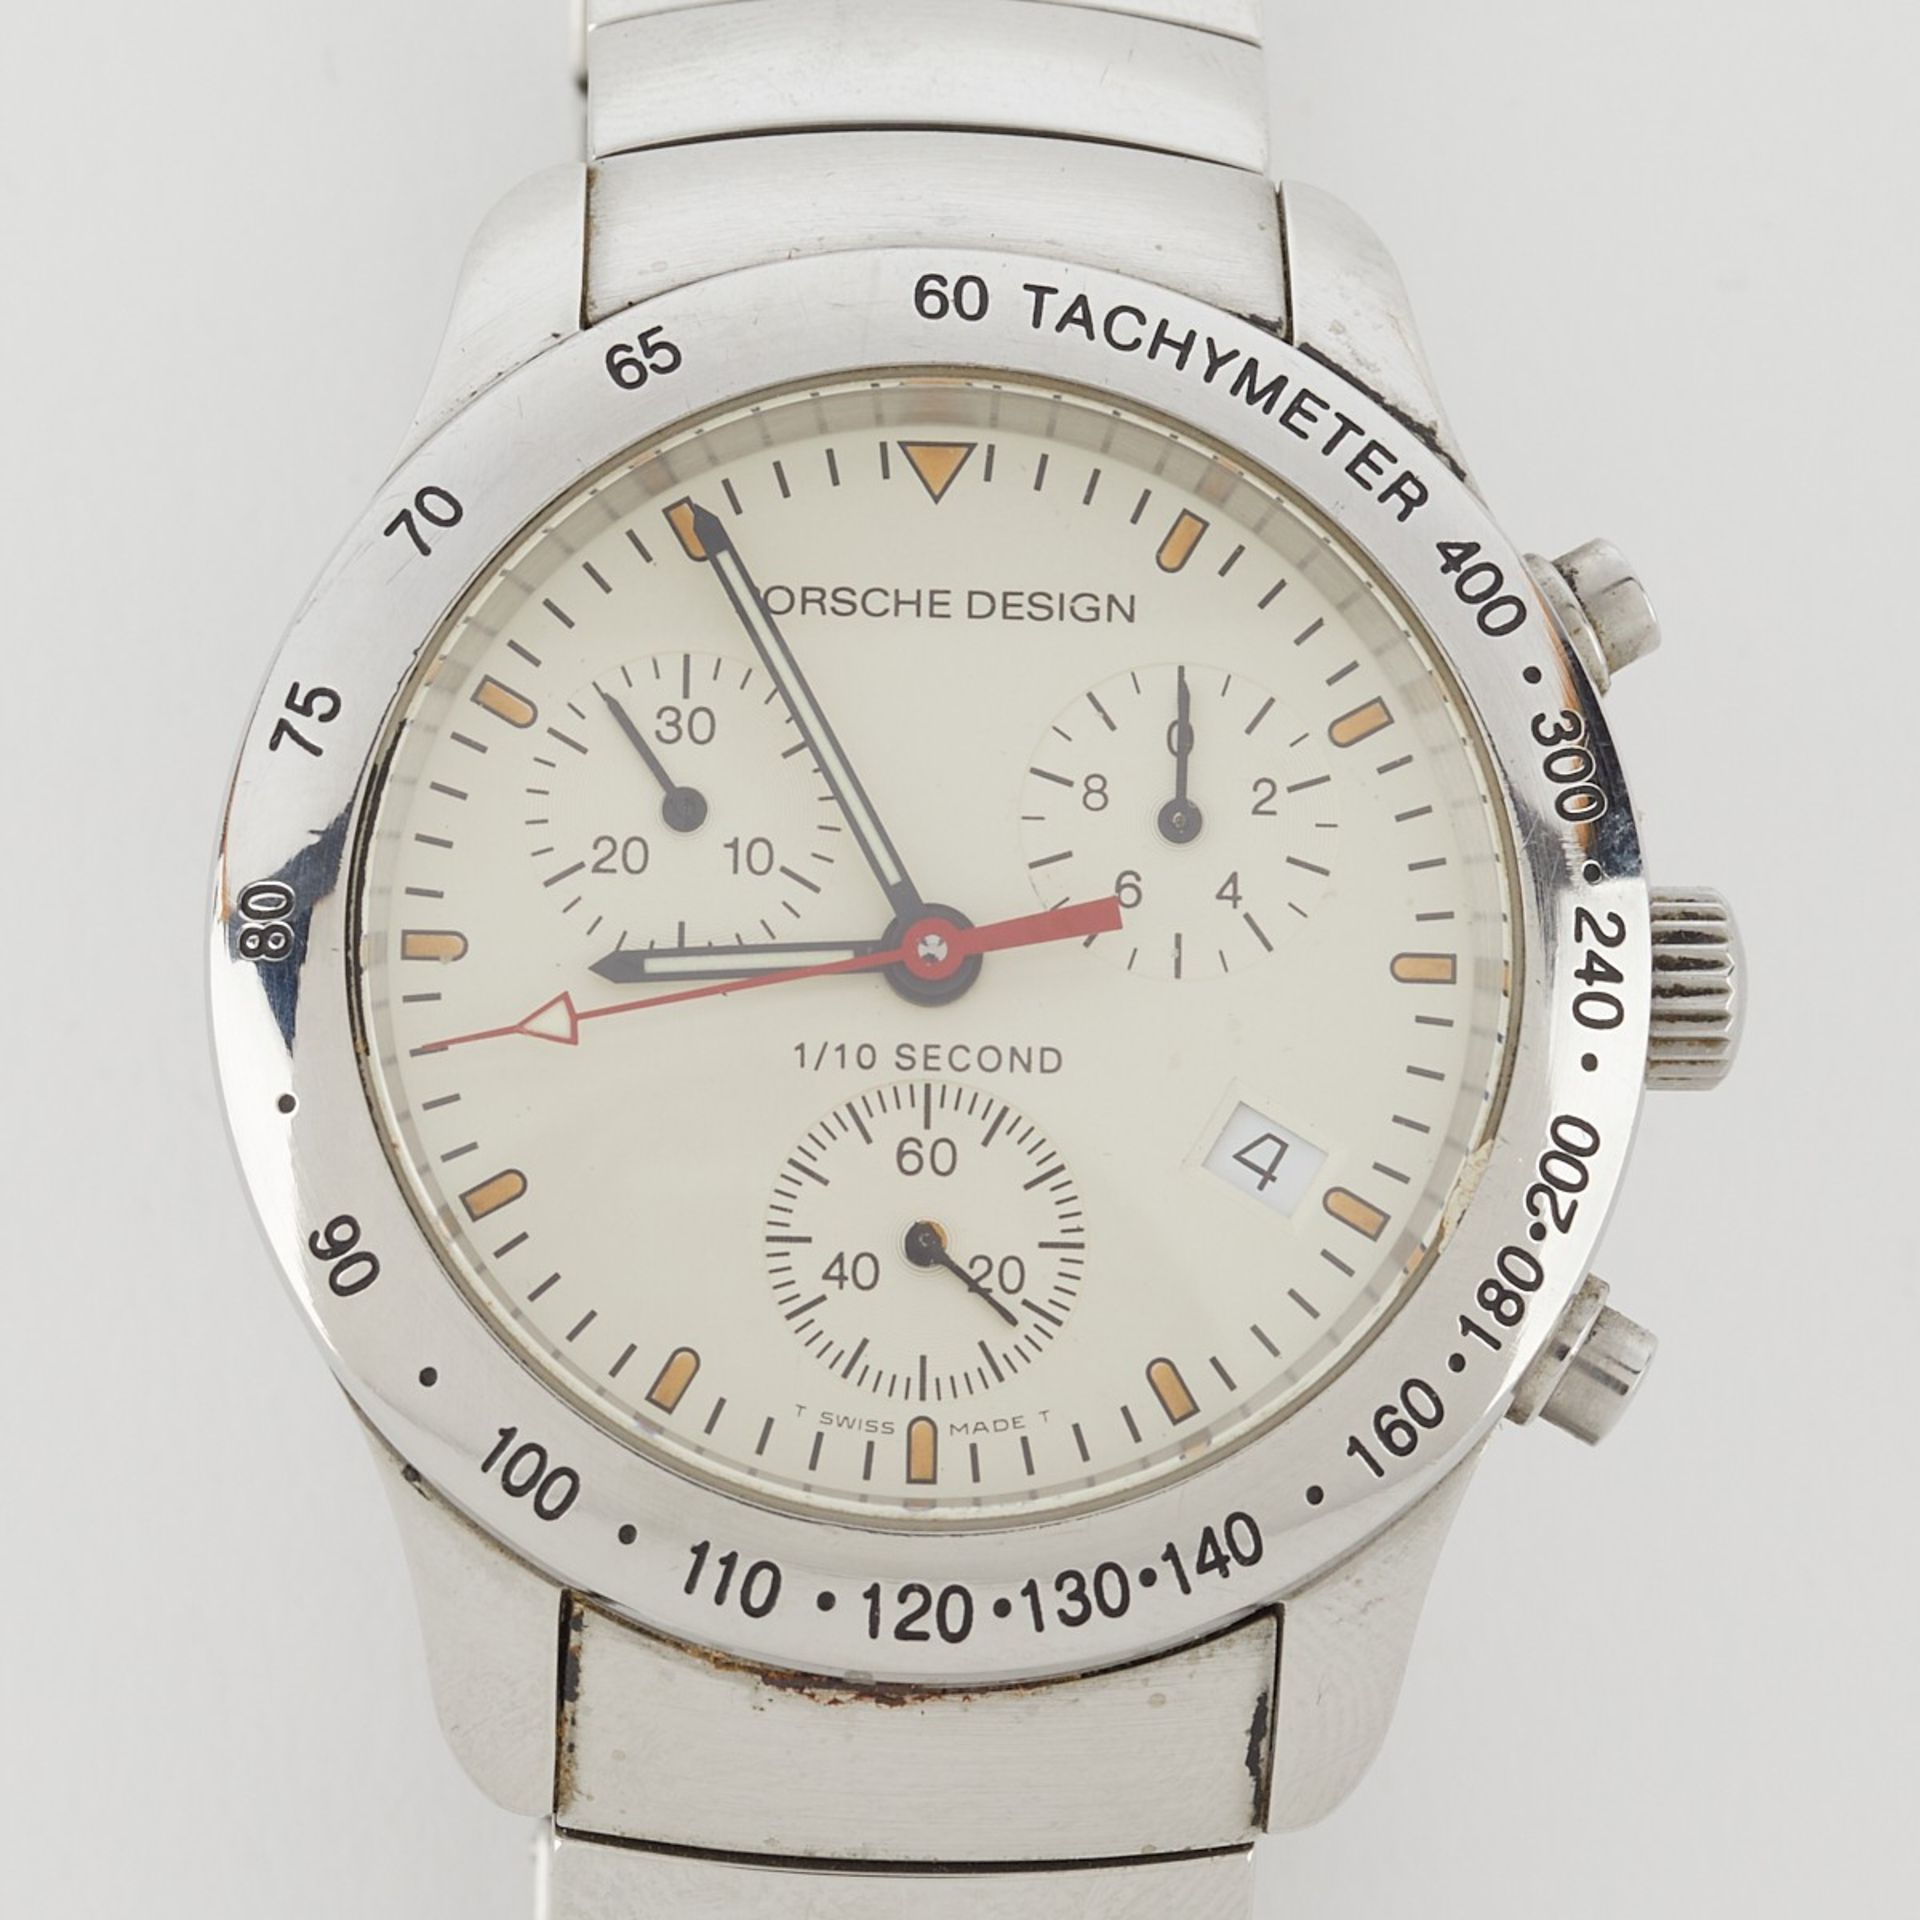 Eterna Porsche Design Swiss Watch - Image 4 of 10